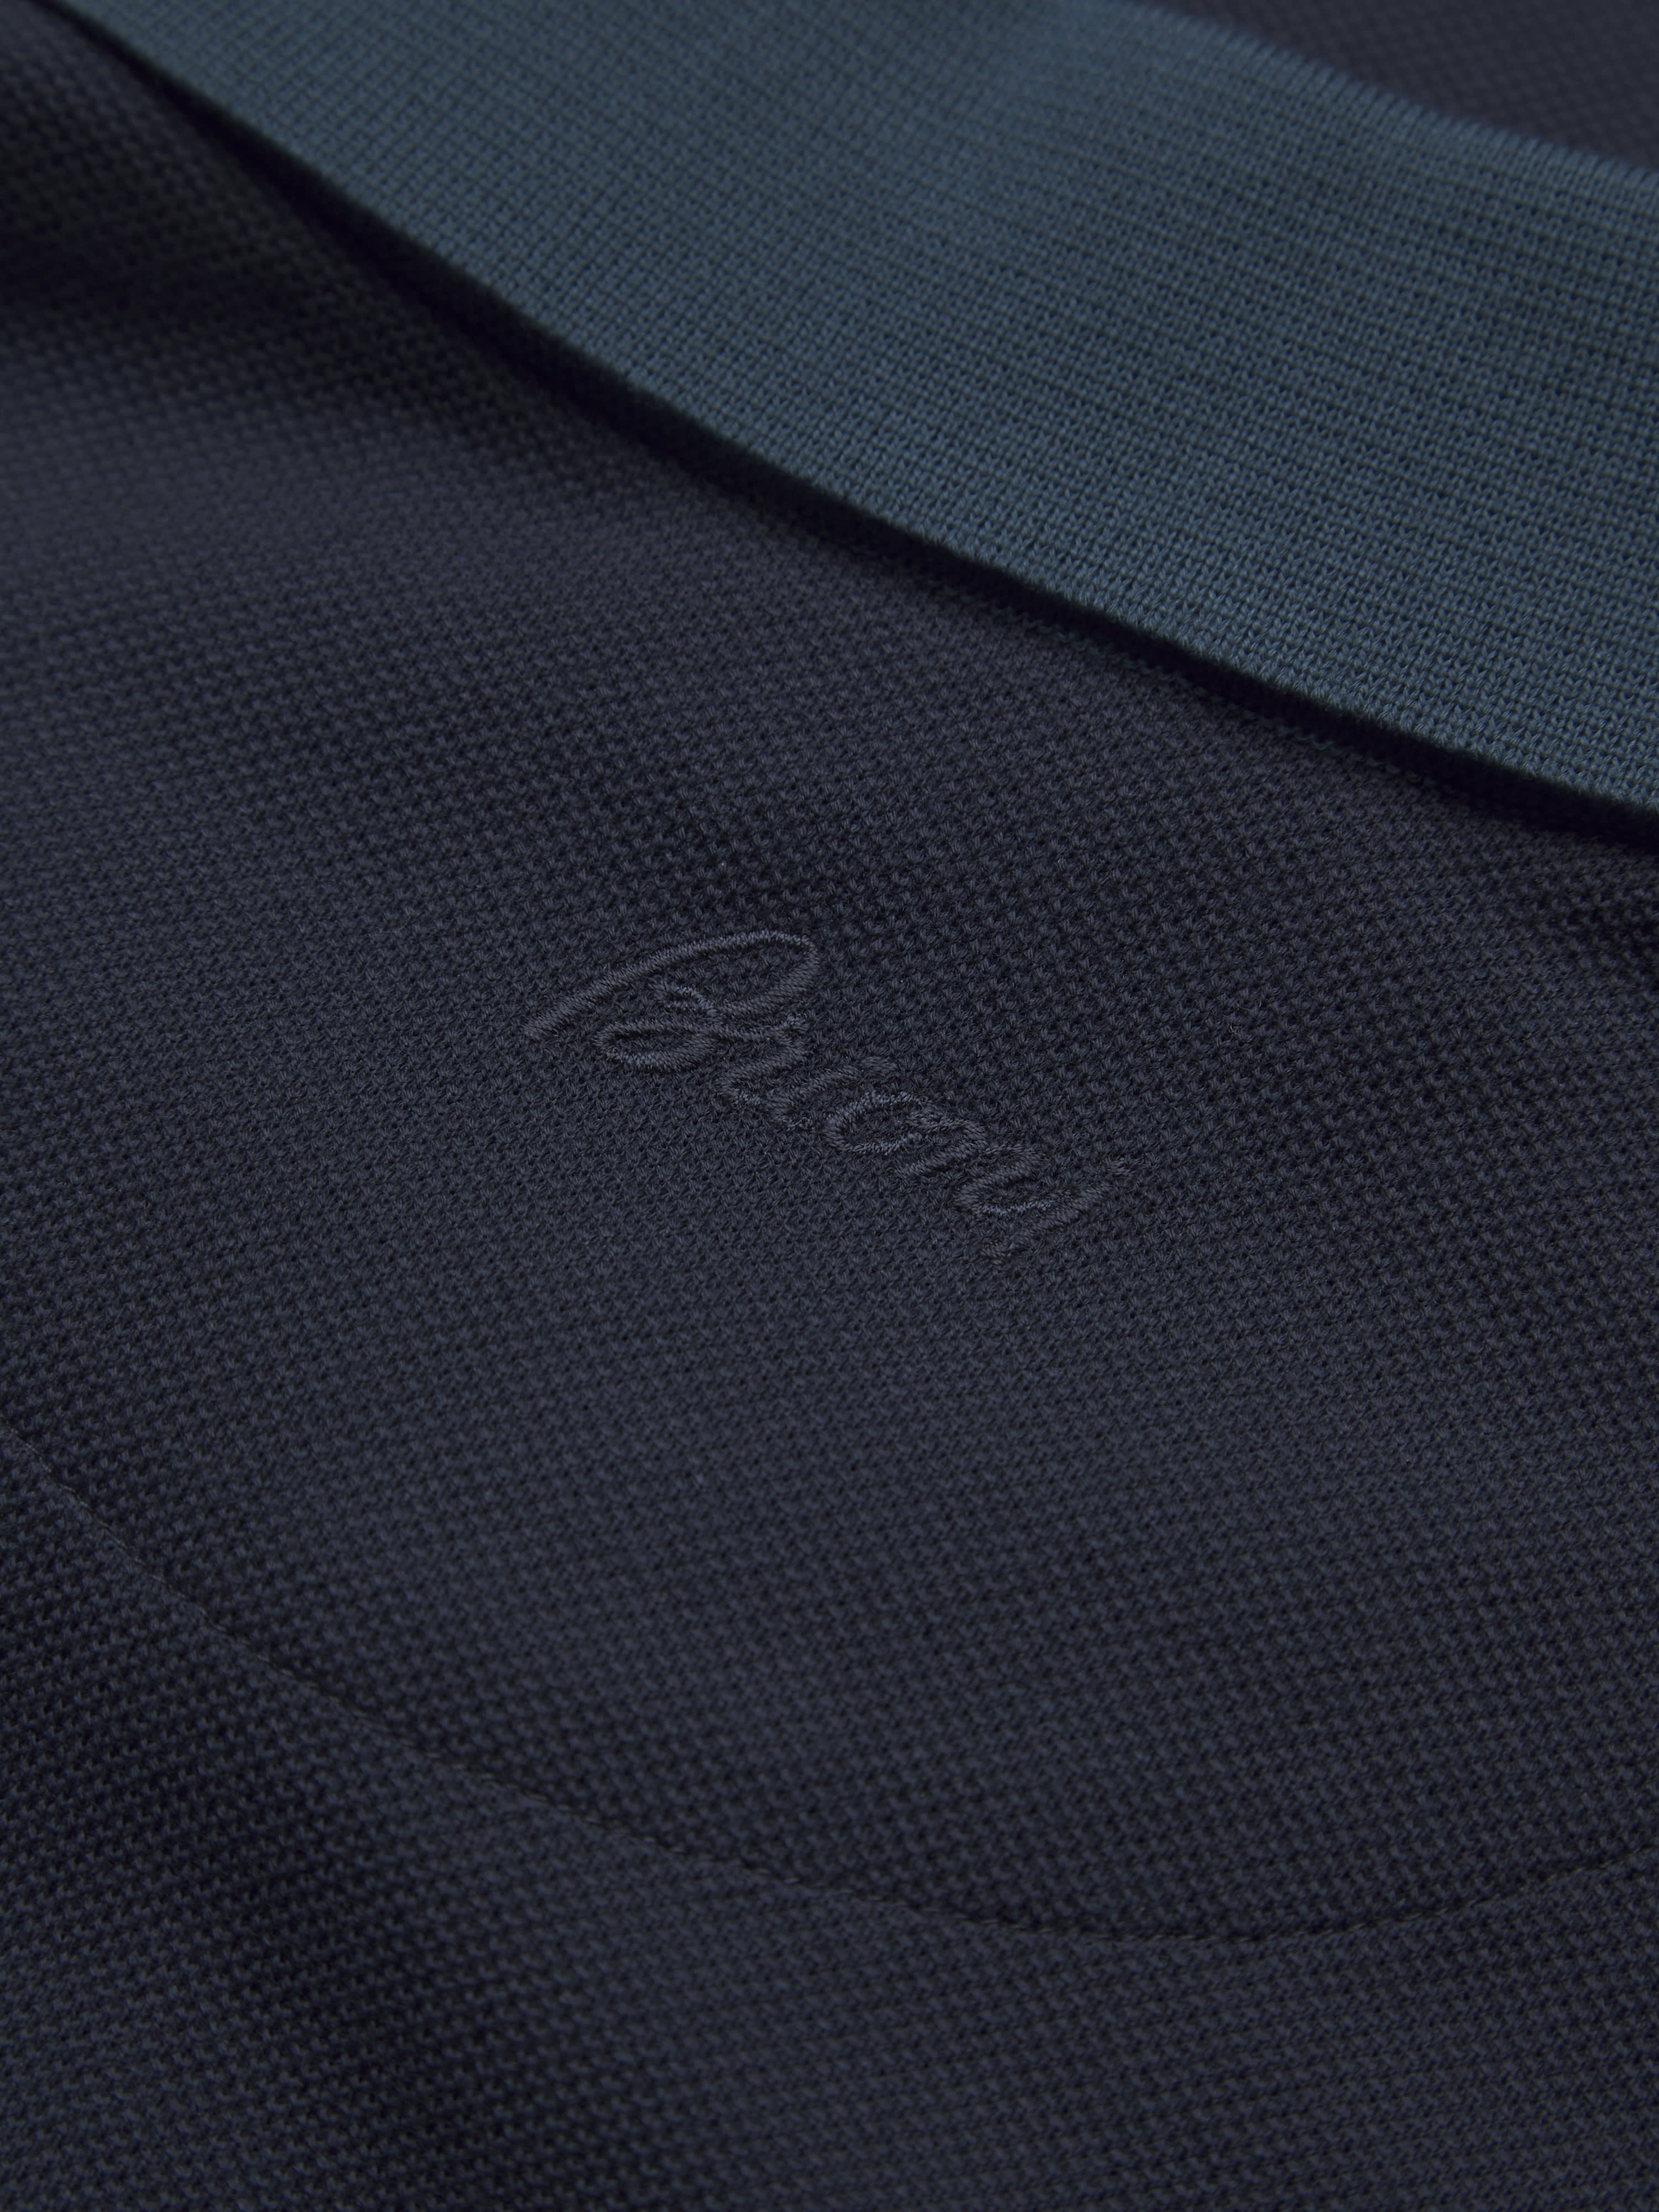 Navy blue and petrol blue cotton piqué polo | Brioni® US Official Store